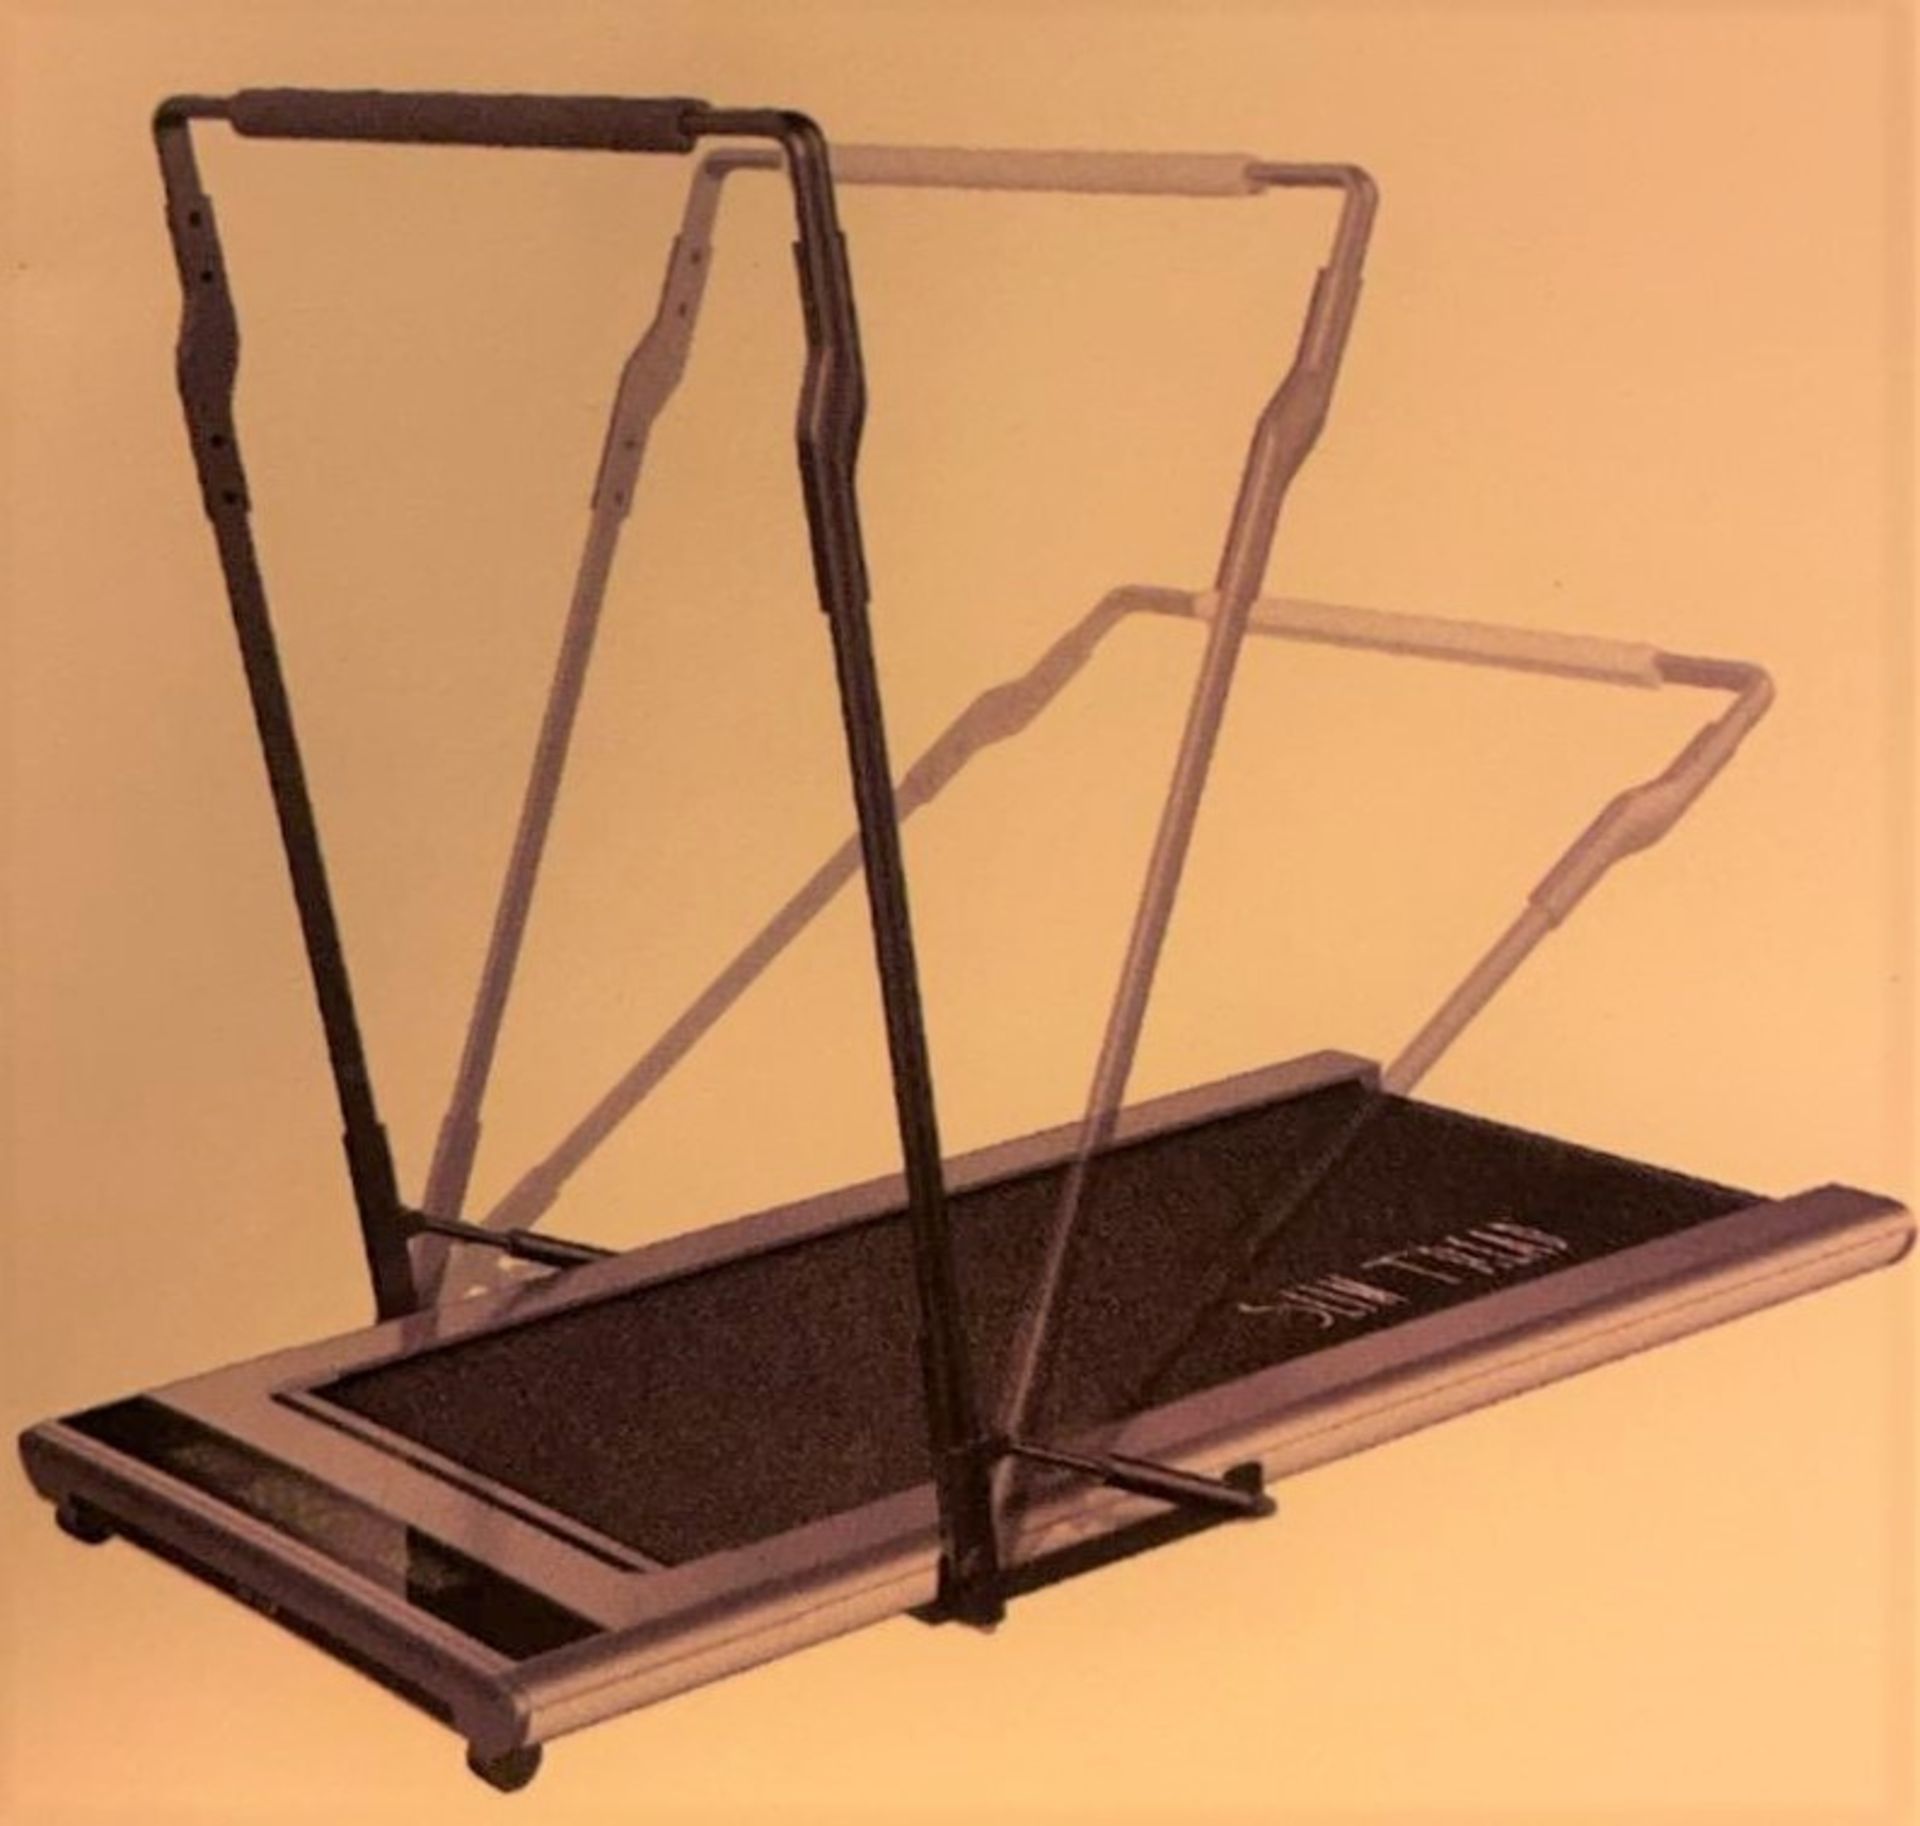 1 x Slim Tread Ultra Thin Smart Treadmill Running / Walking Machine - Lightweight With Folding - Image 5 of 15